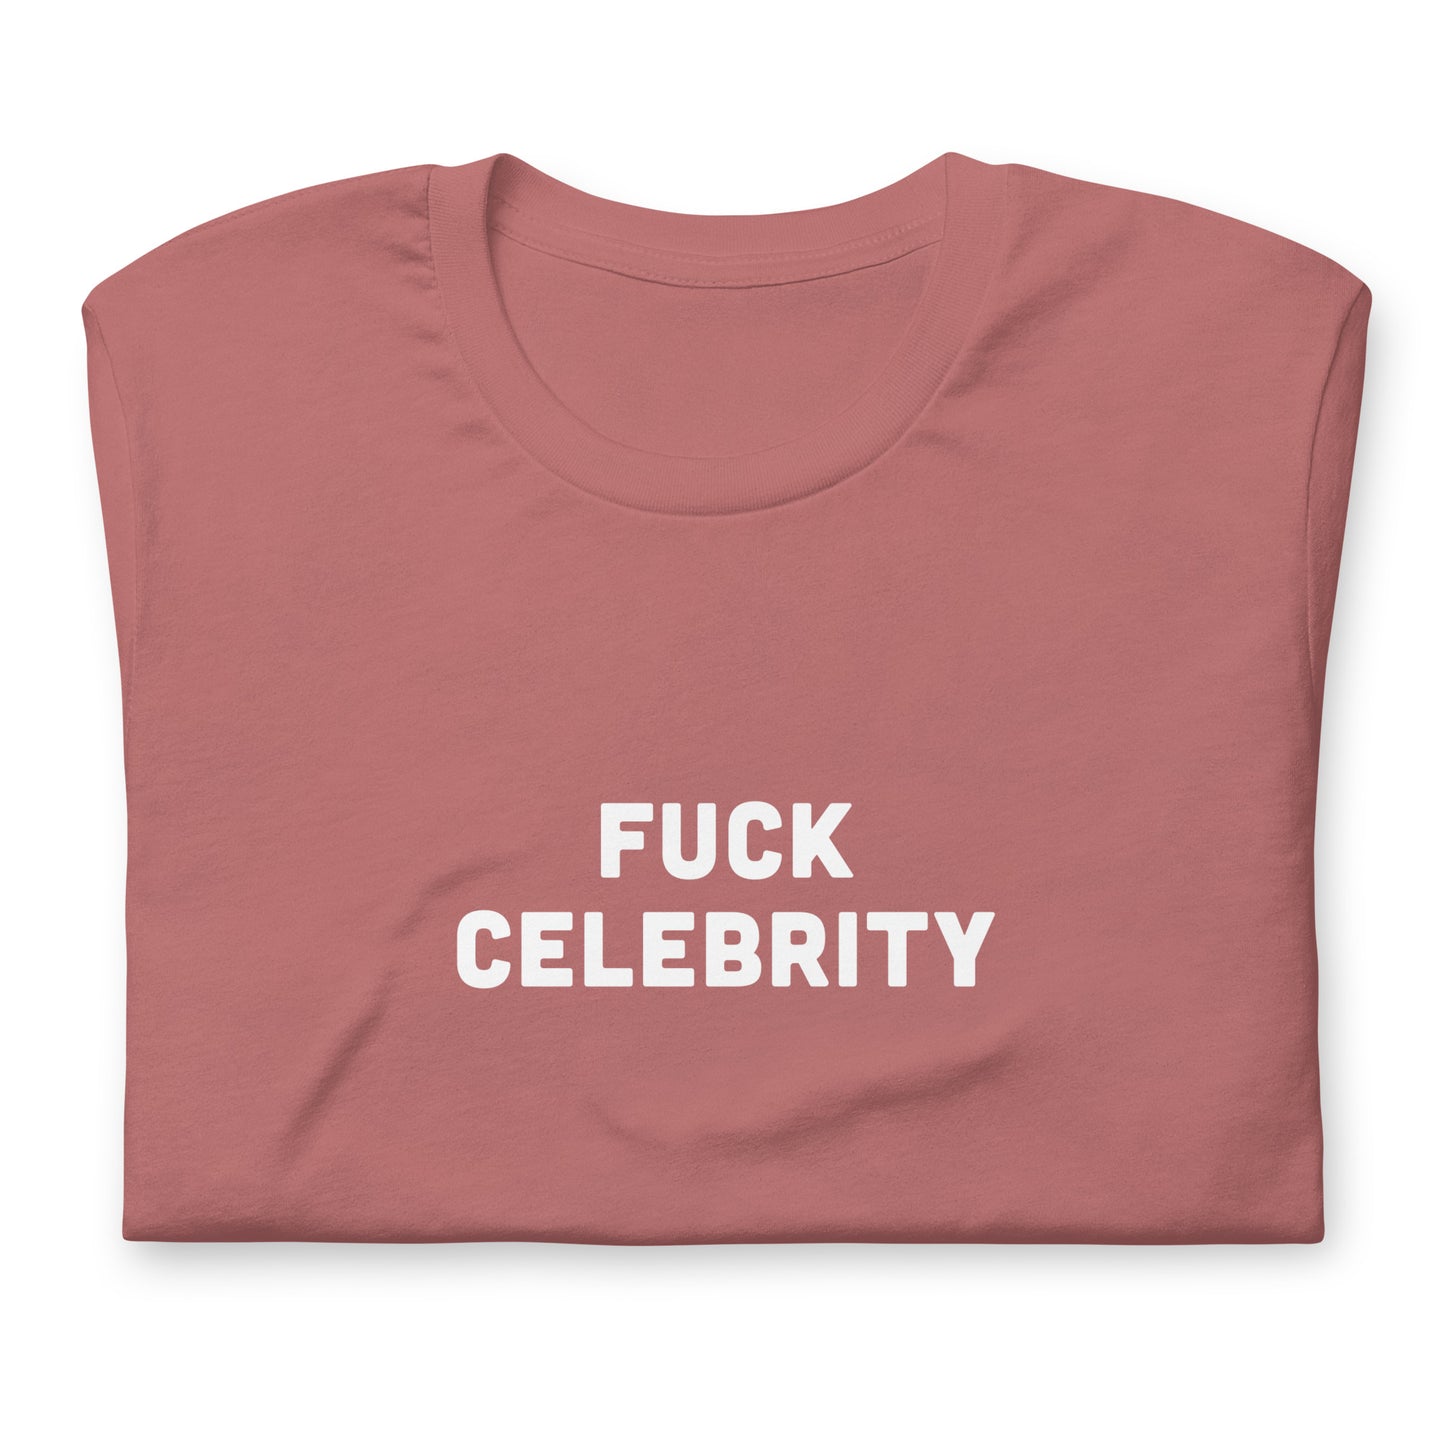 Fuck Celebrity T-Shirt Size 2XL Color Navy